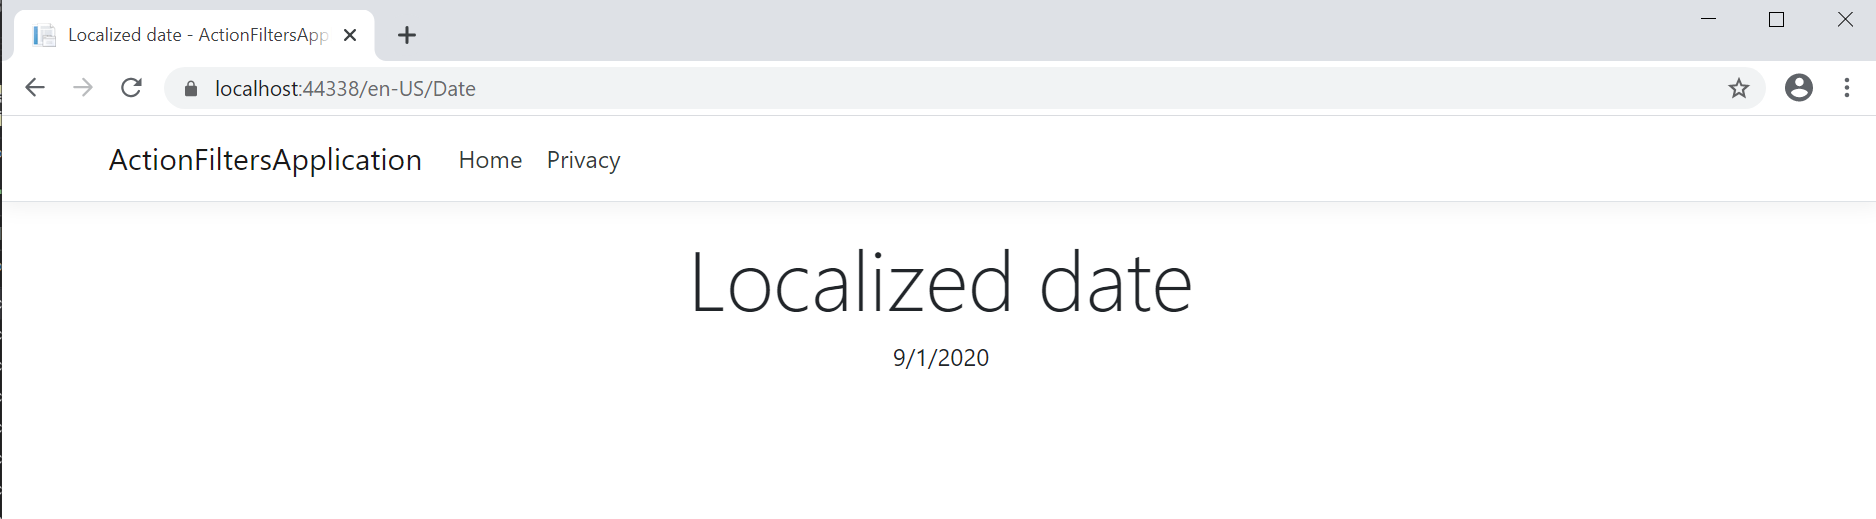 localized date